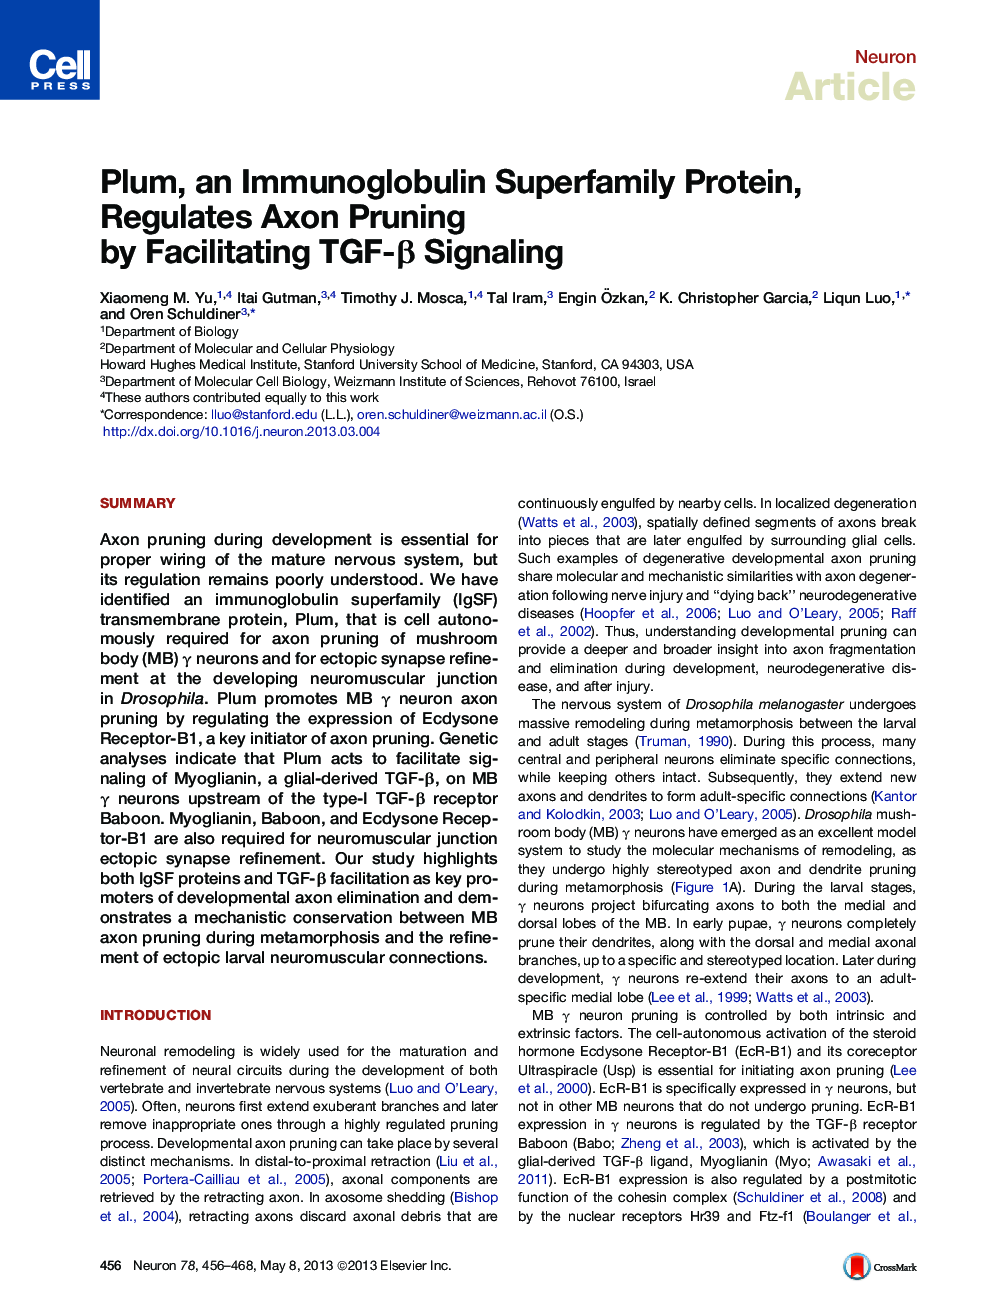 Plum, an Immunoglobulin Superfamily Protein, Regulates Axon Pruning by Facilitating TGF-β Signaling